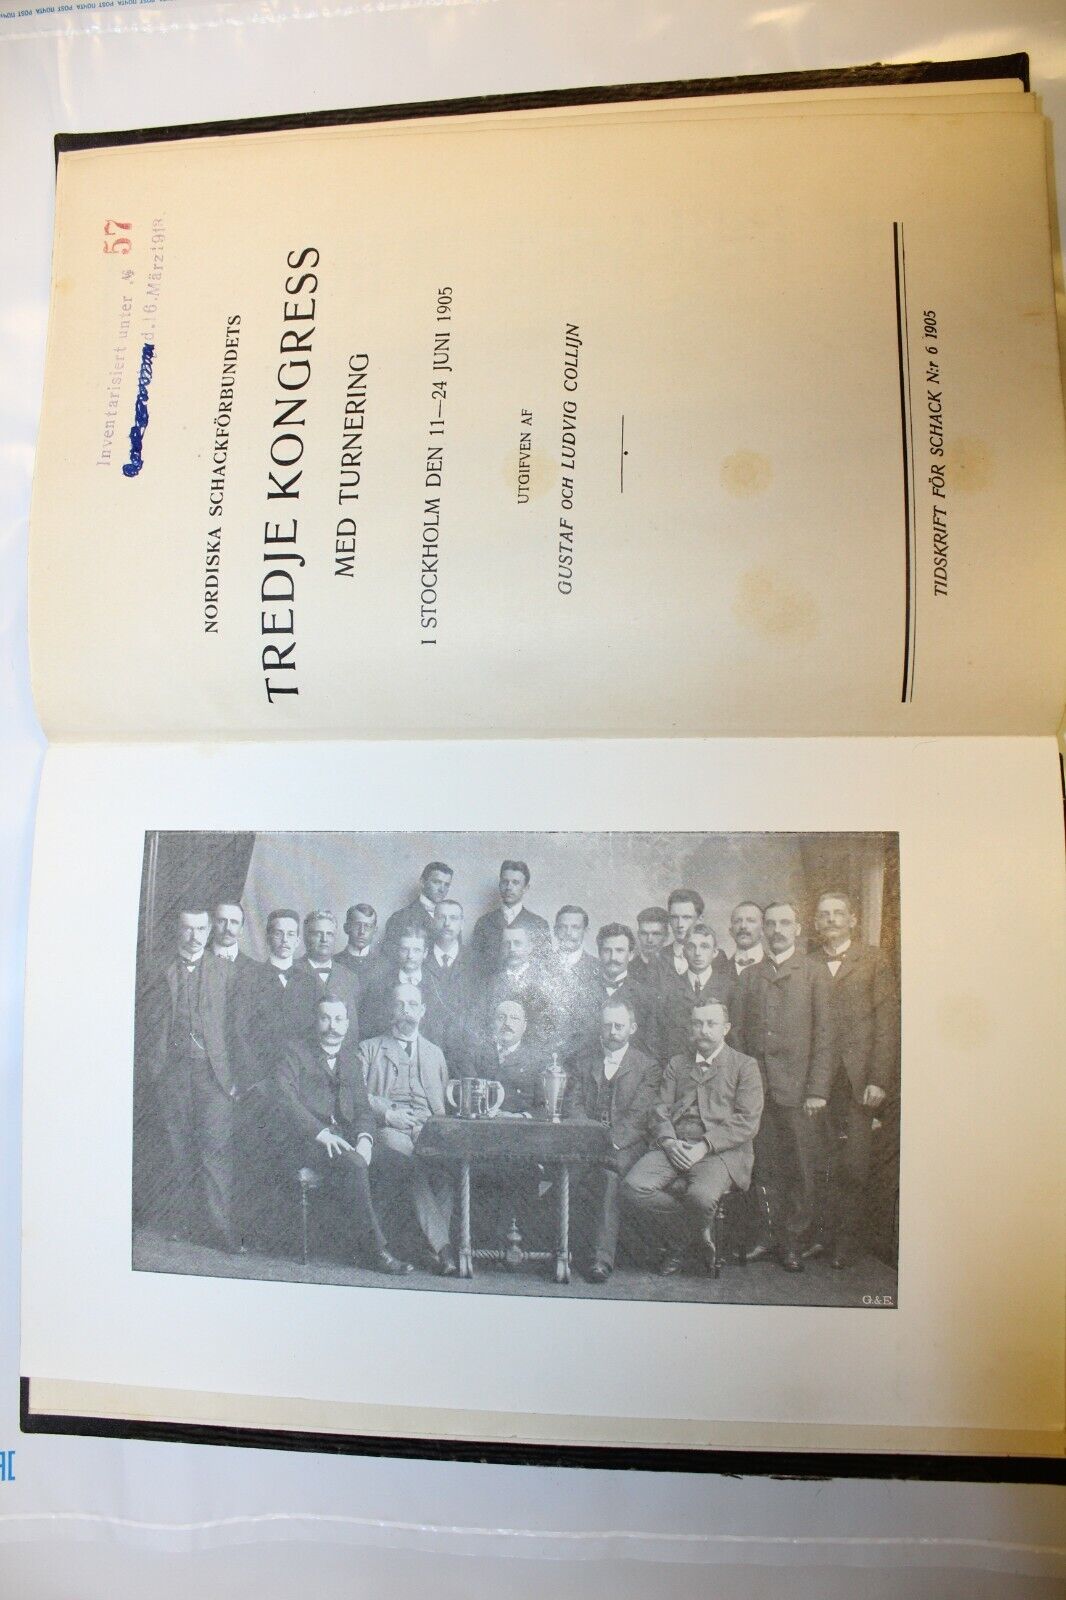 11884.Swedish Chess Book: Tredje Kongress Med Turnering. Stockholm 1905